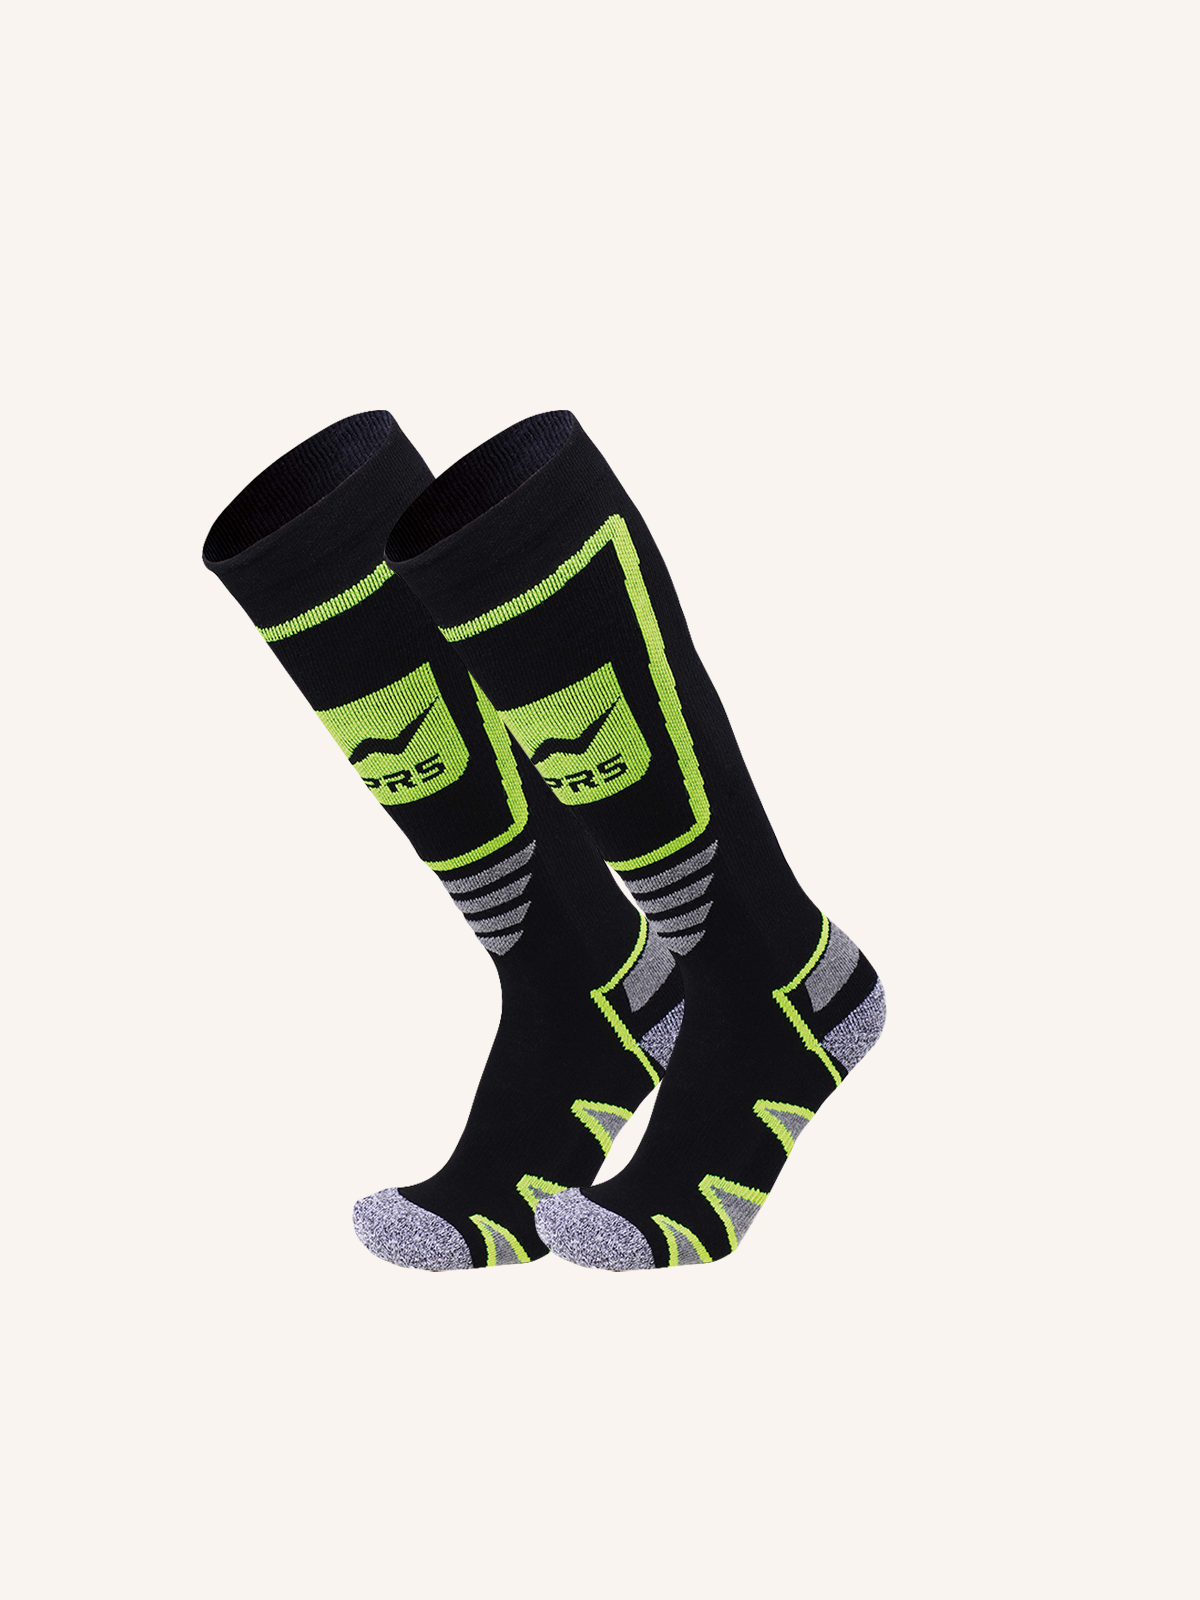 Long Cotton Socks for Men for Snowboard/Ski | Plain Color | Pack of 2 Pairs | PRS PRO 10